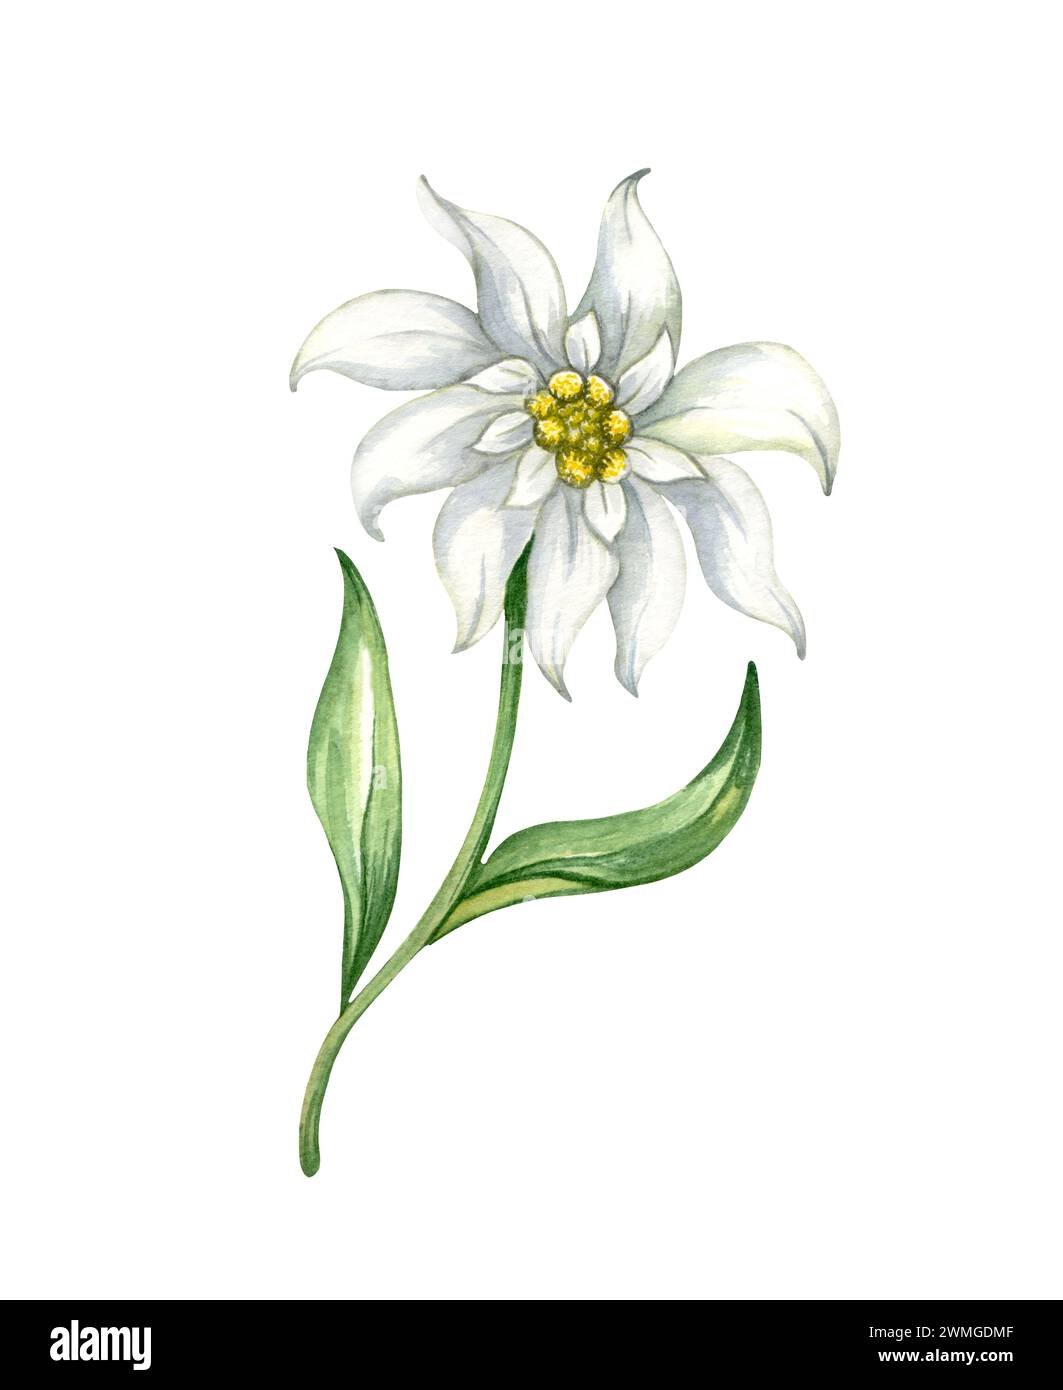 Edelweiss flower Leontopodium alpinum, Watercolor hand drawn illustration isolated on white background Stock Photo